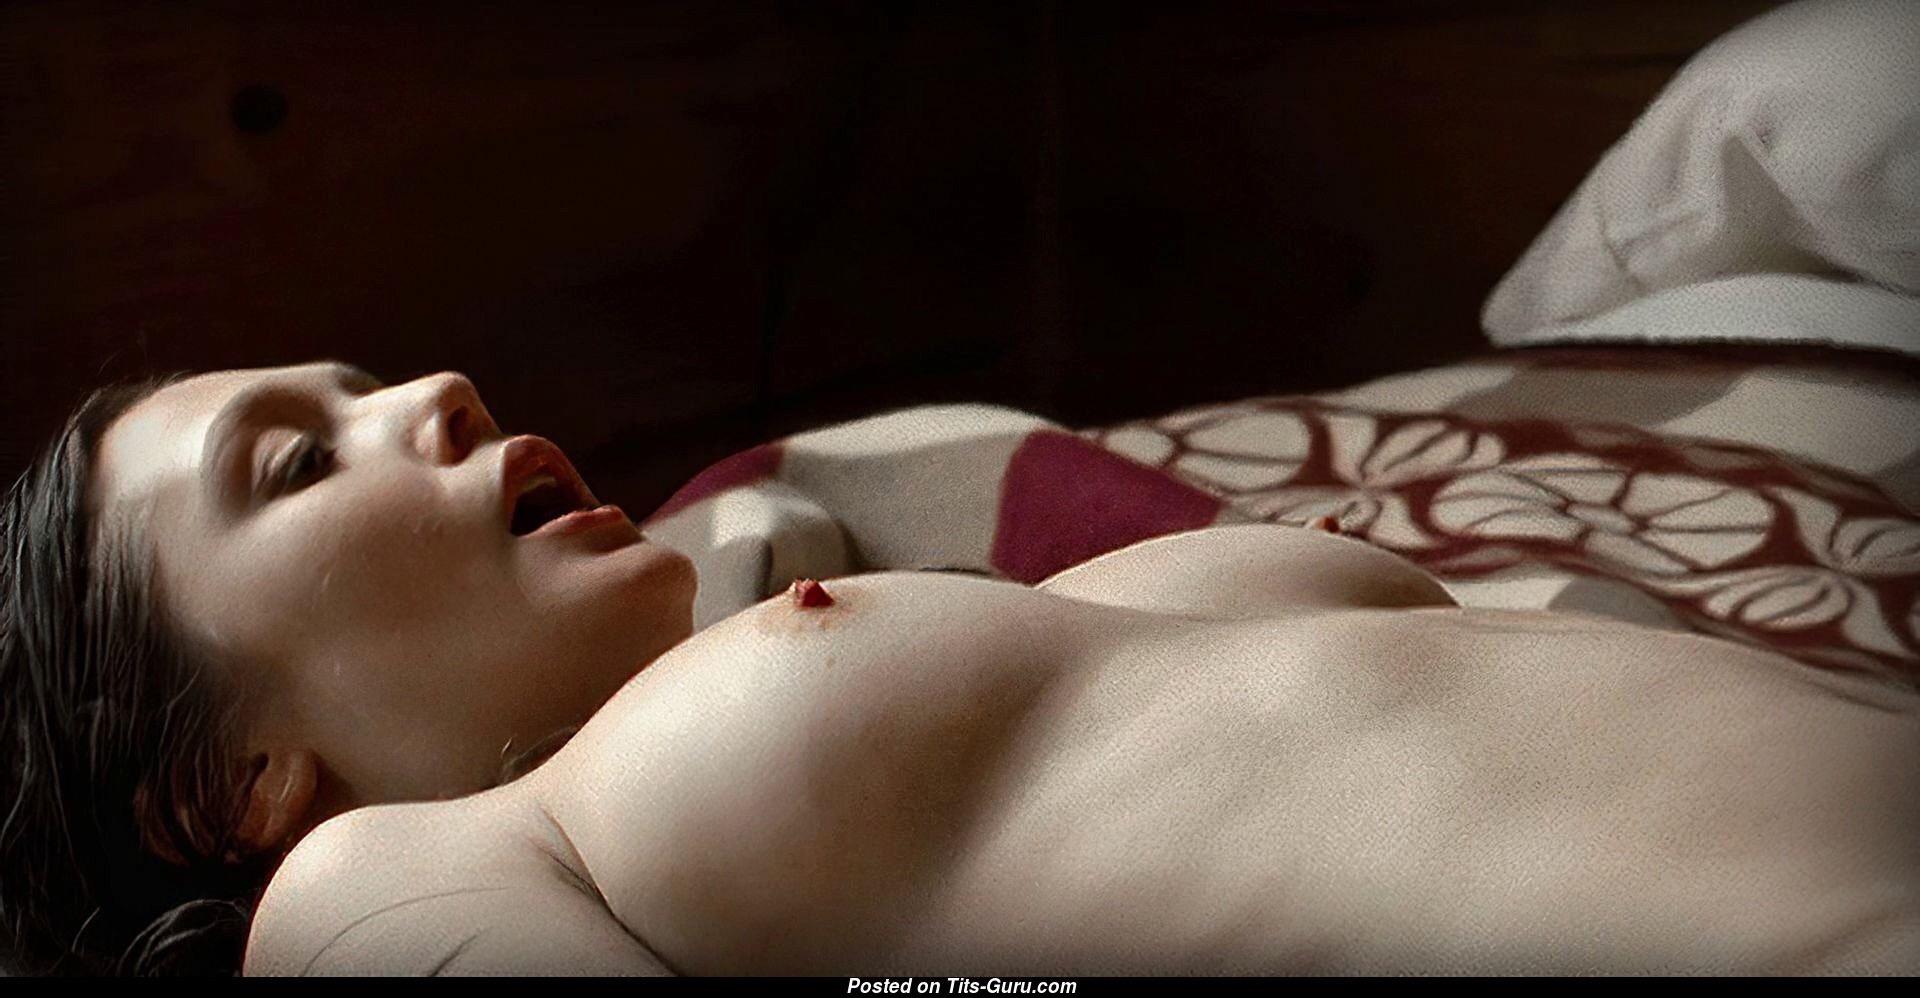 Elizabeth Olsen has some amazing tits